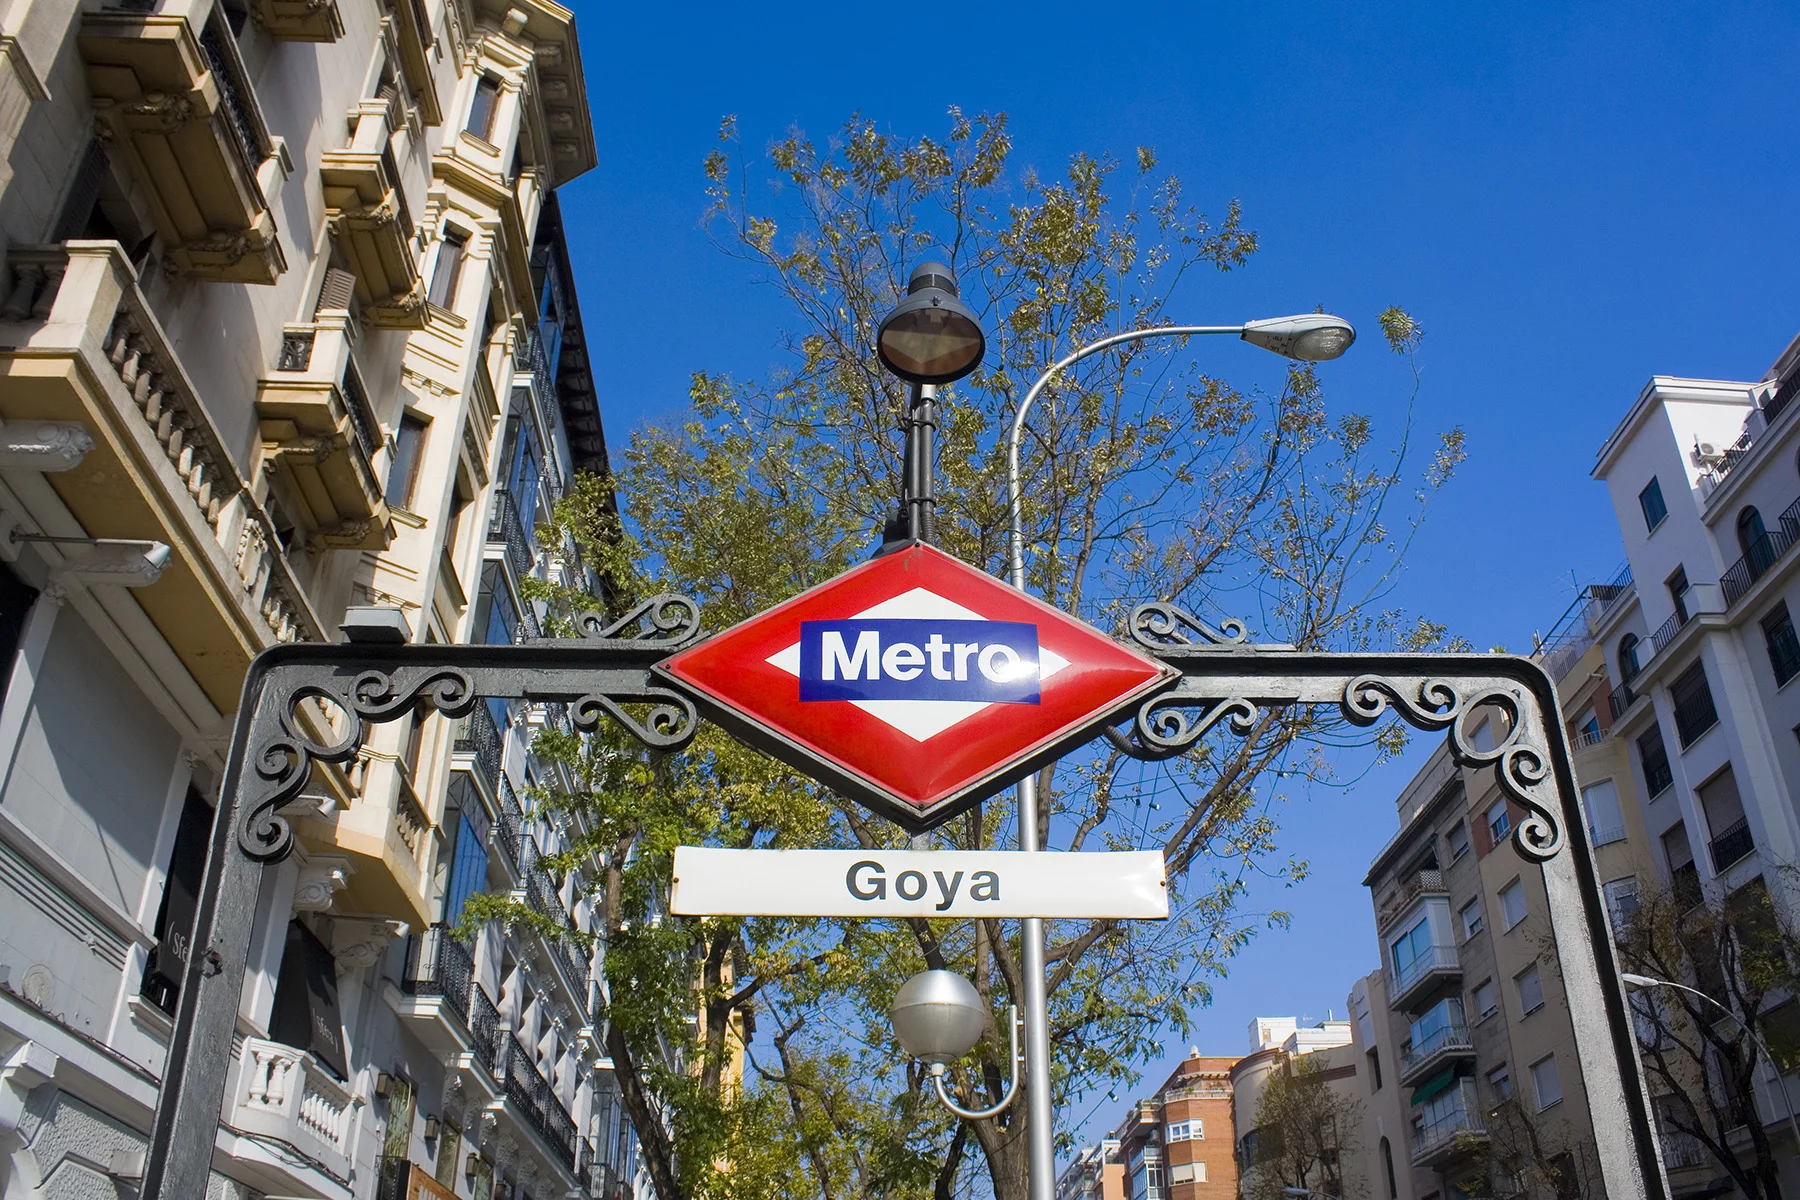 Metro station entrance in Goya, Madrid